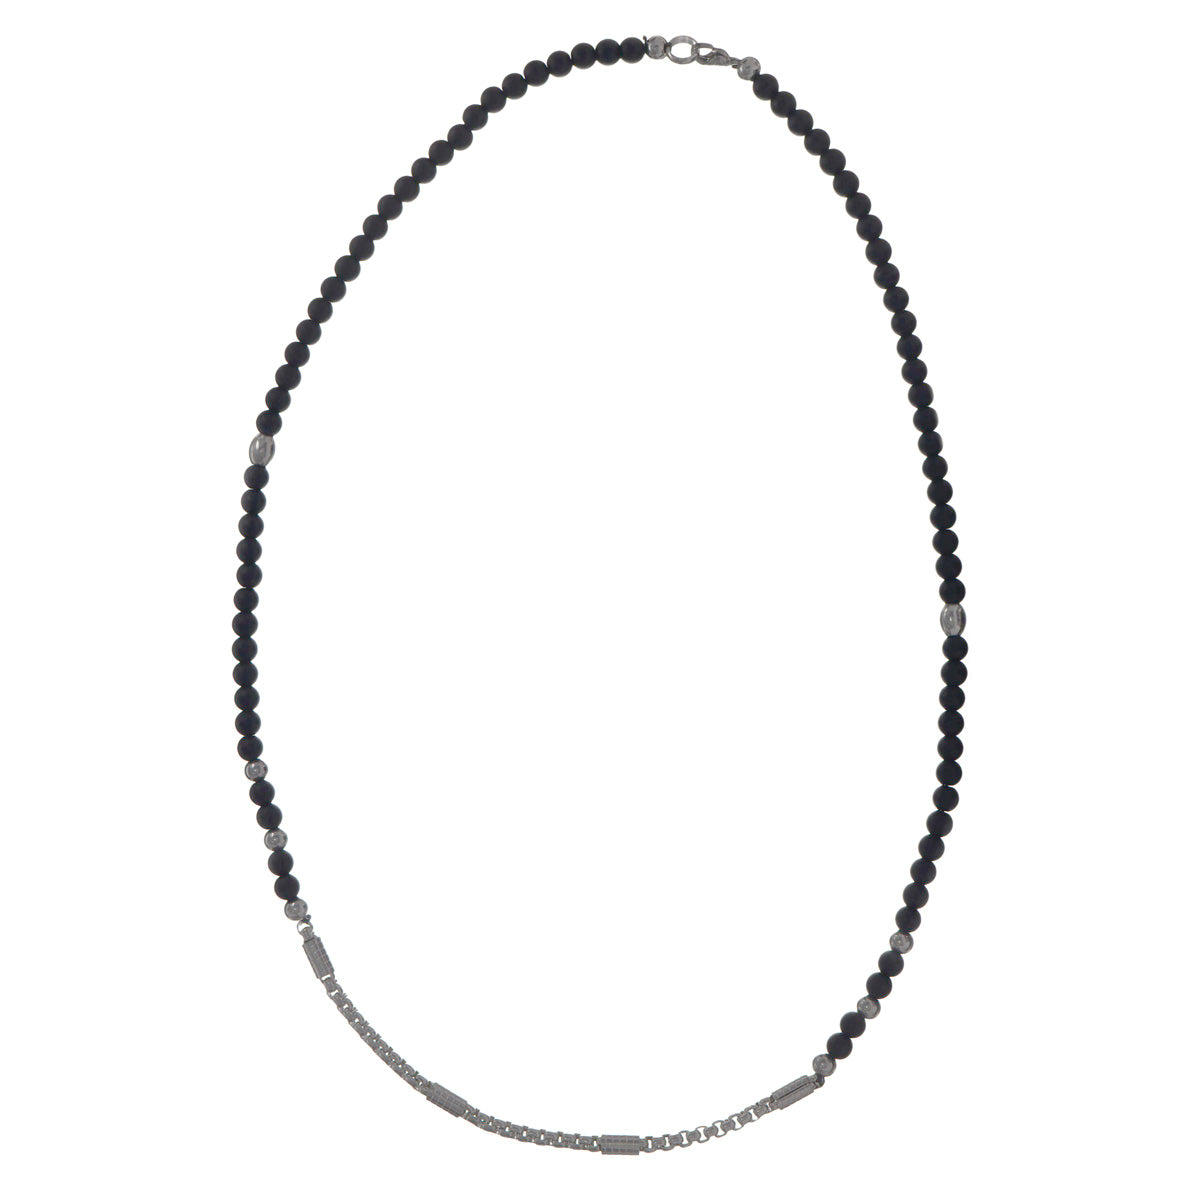 Black beads on steel chain 65cm